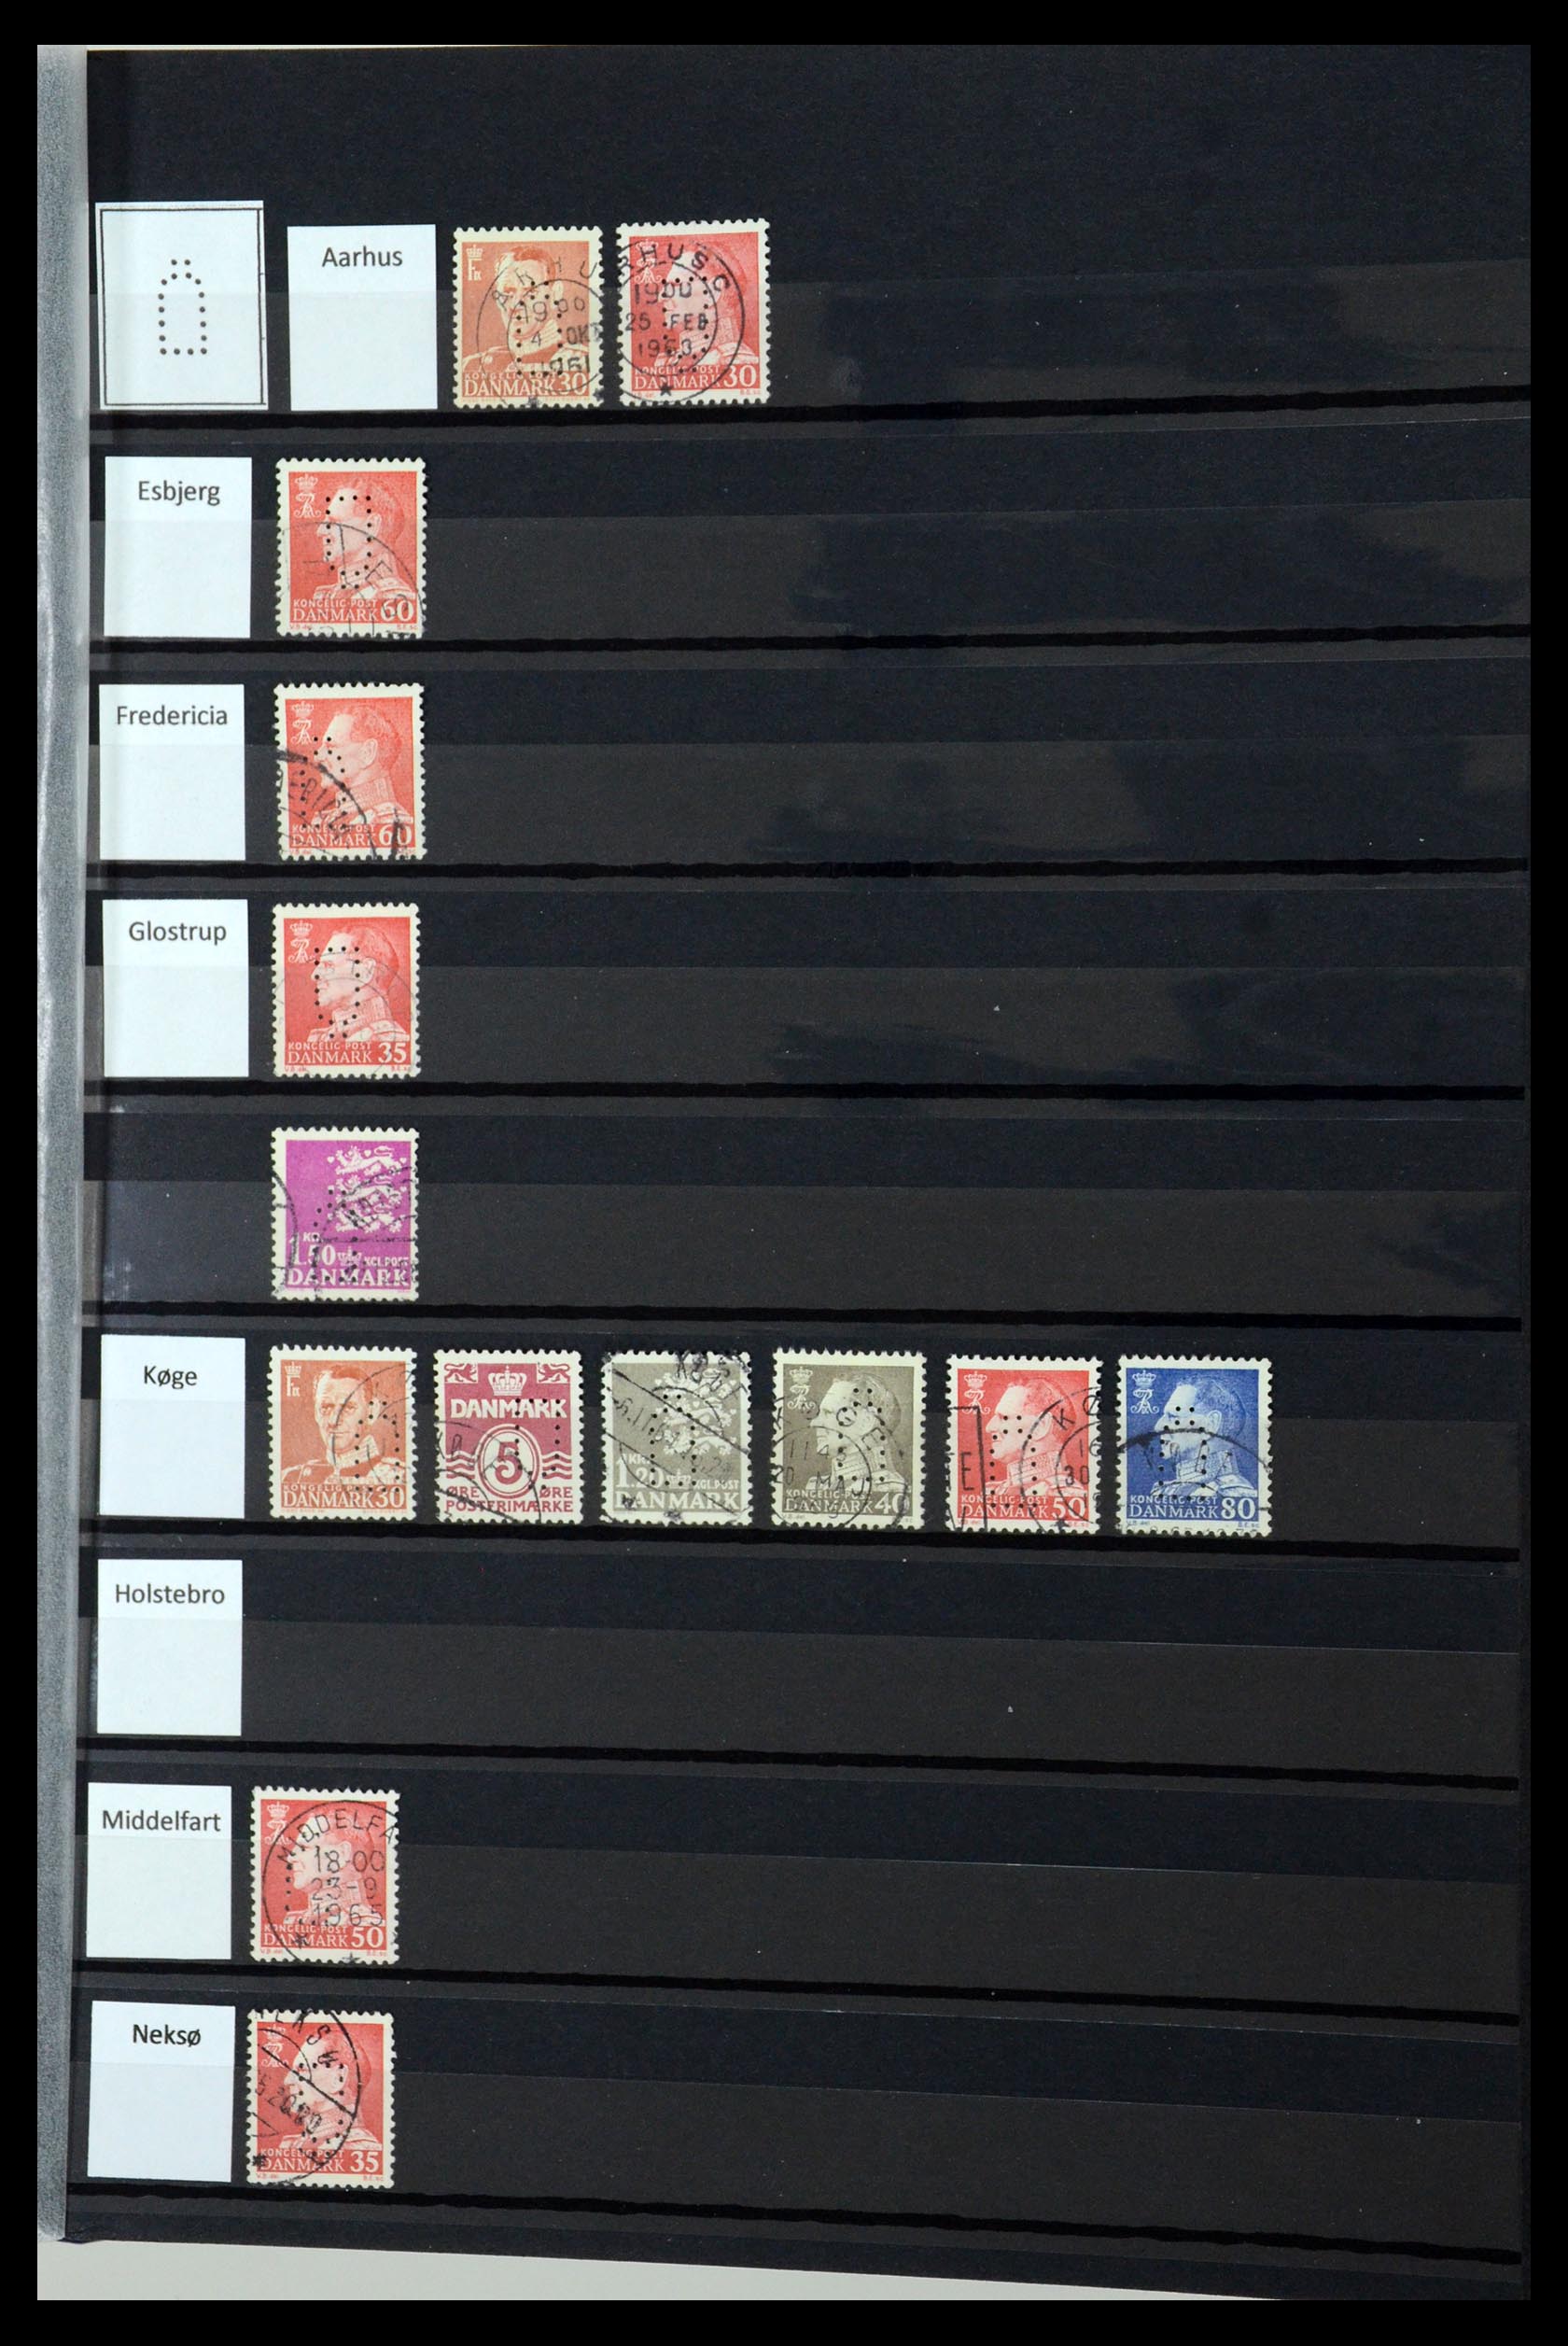 36396 112 - Stamp collection 36396 Denmark perfins.